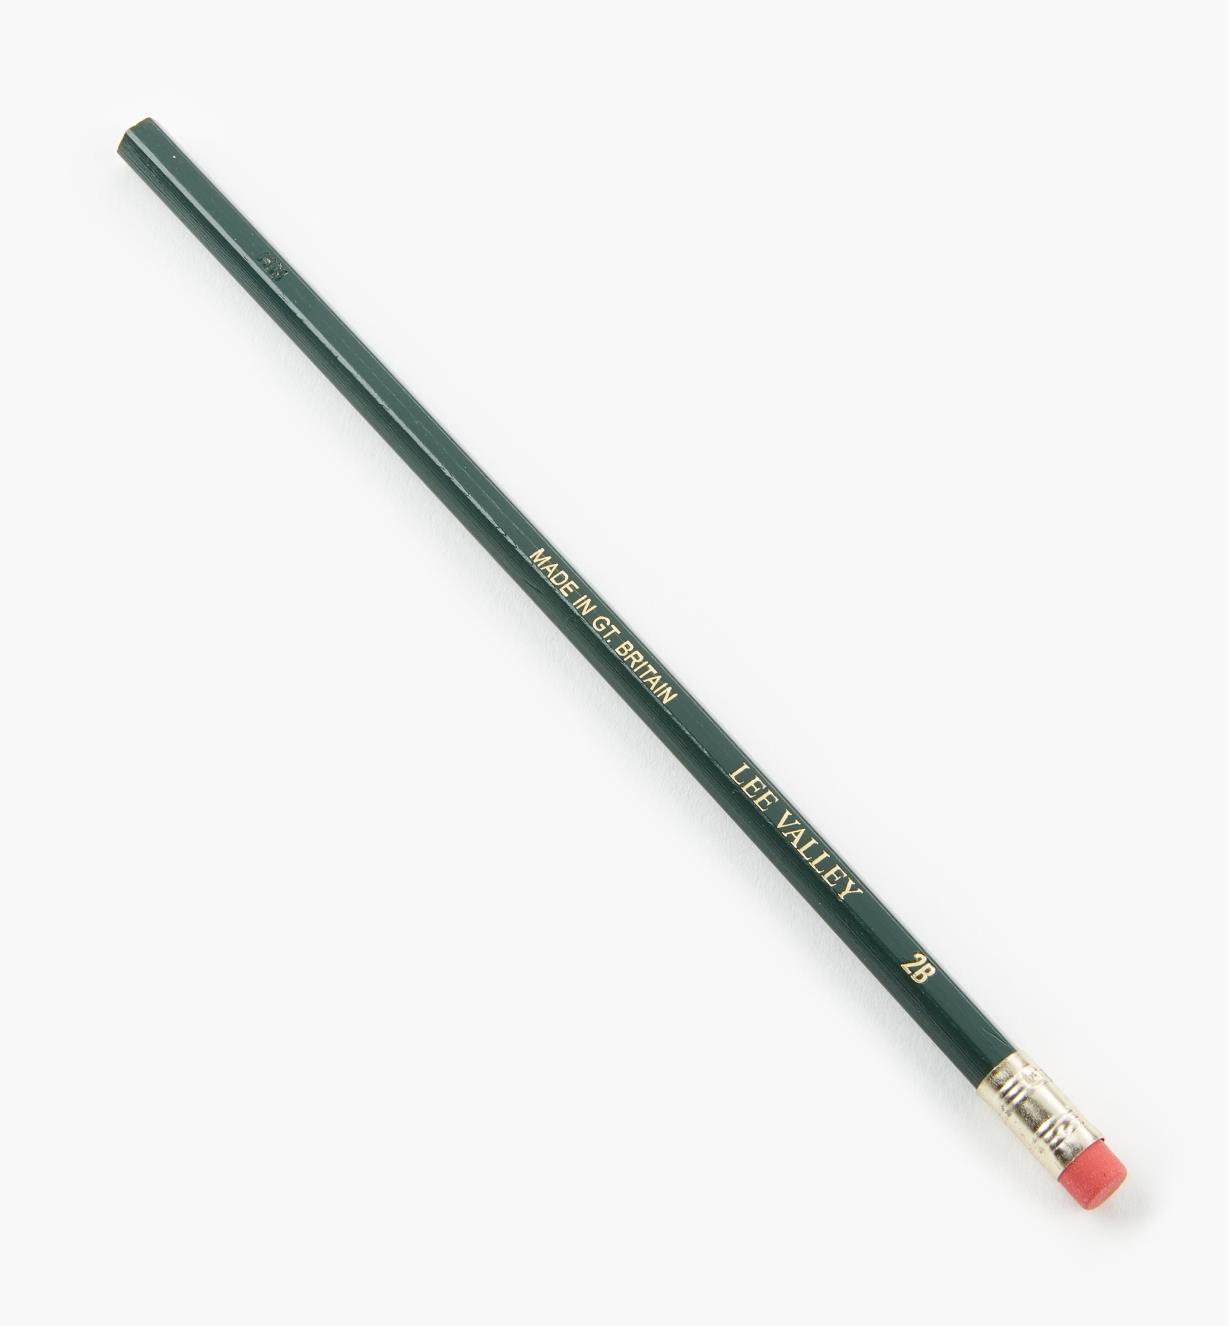 83U0402 - 2B Pencils, box of 12